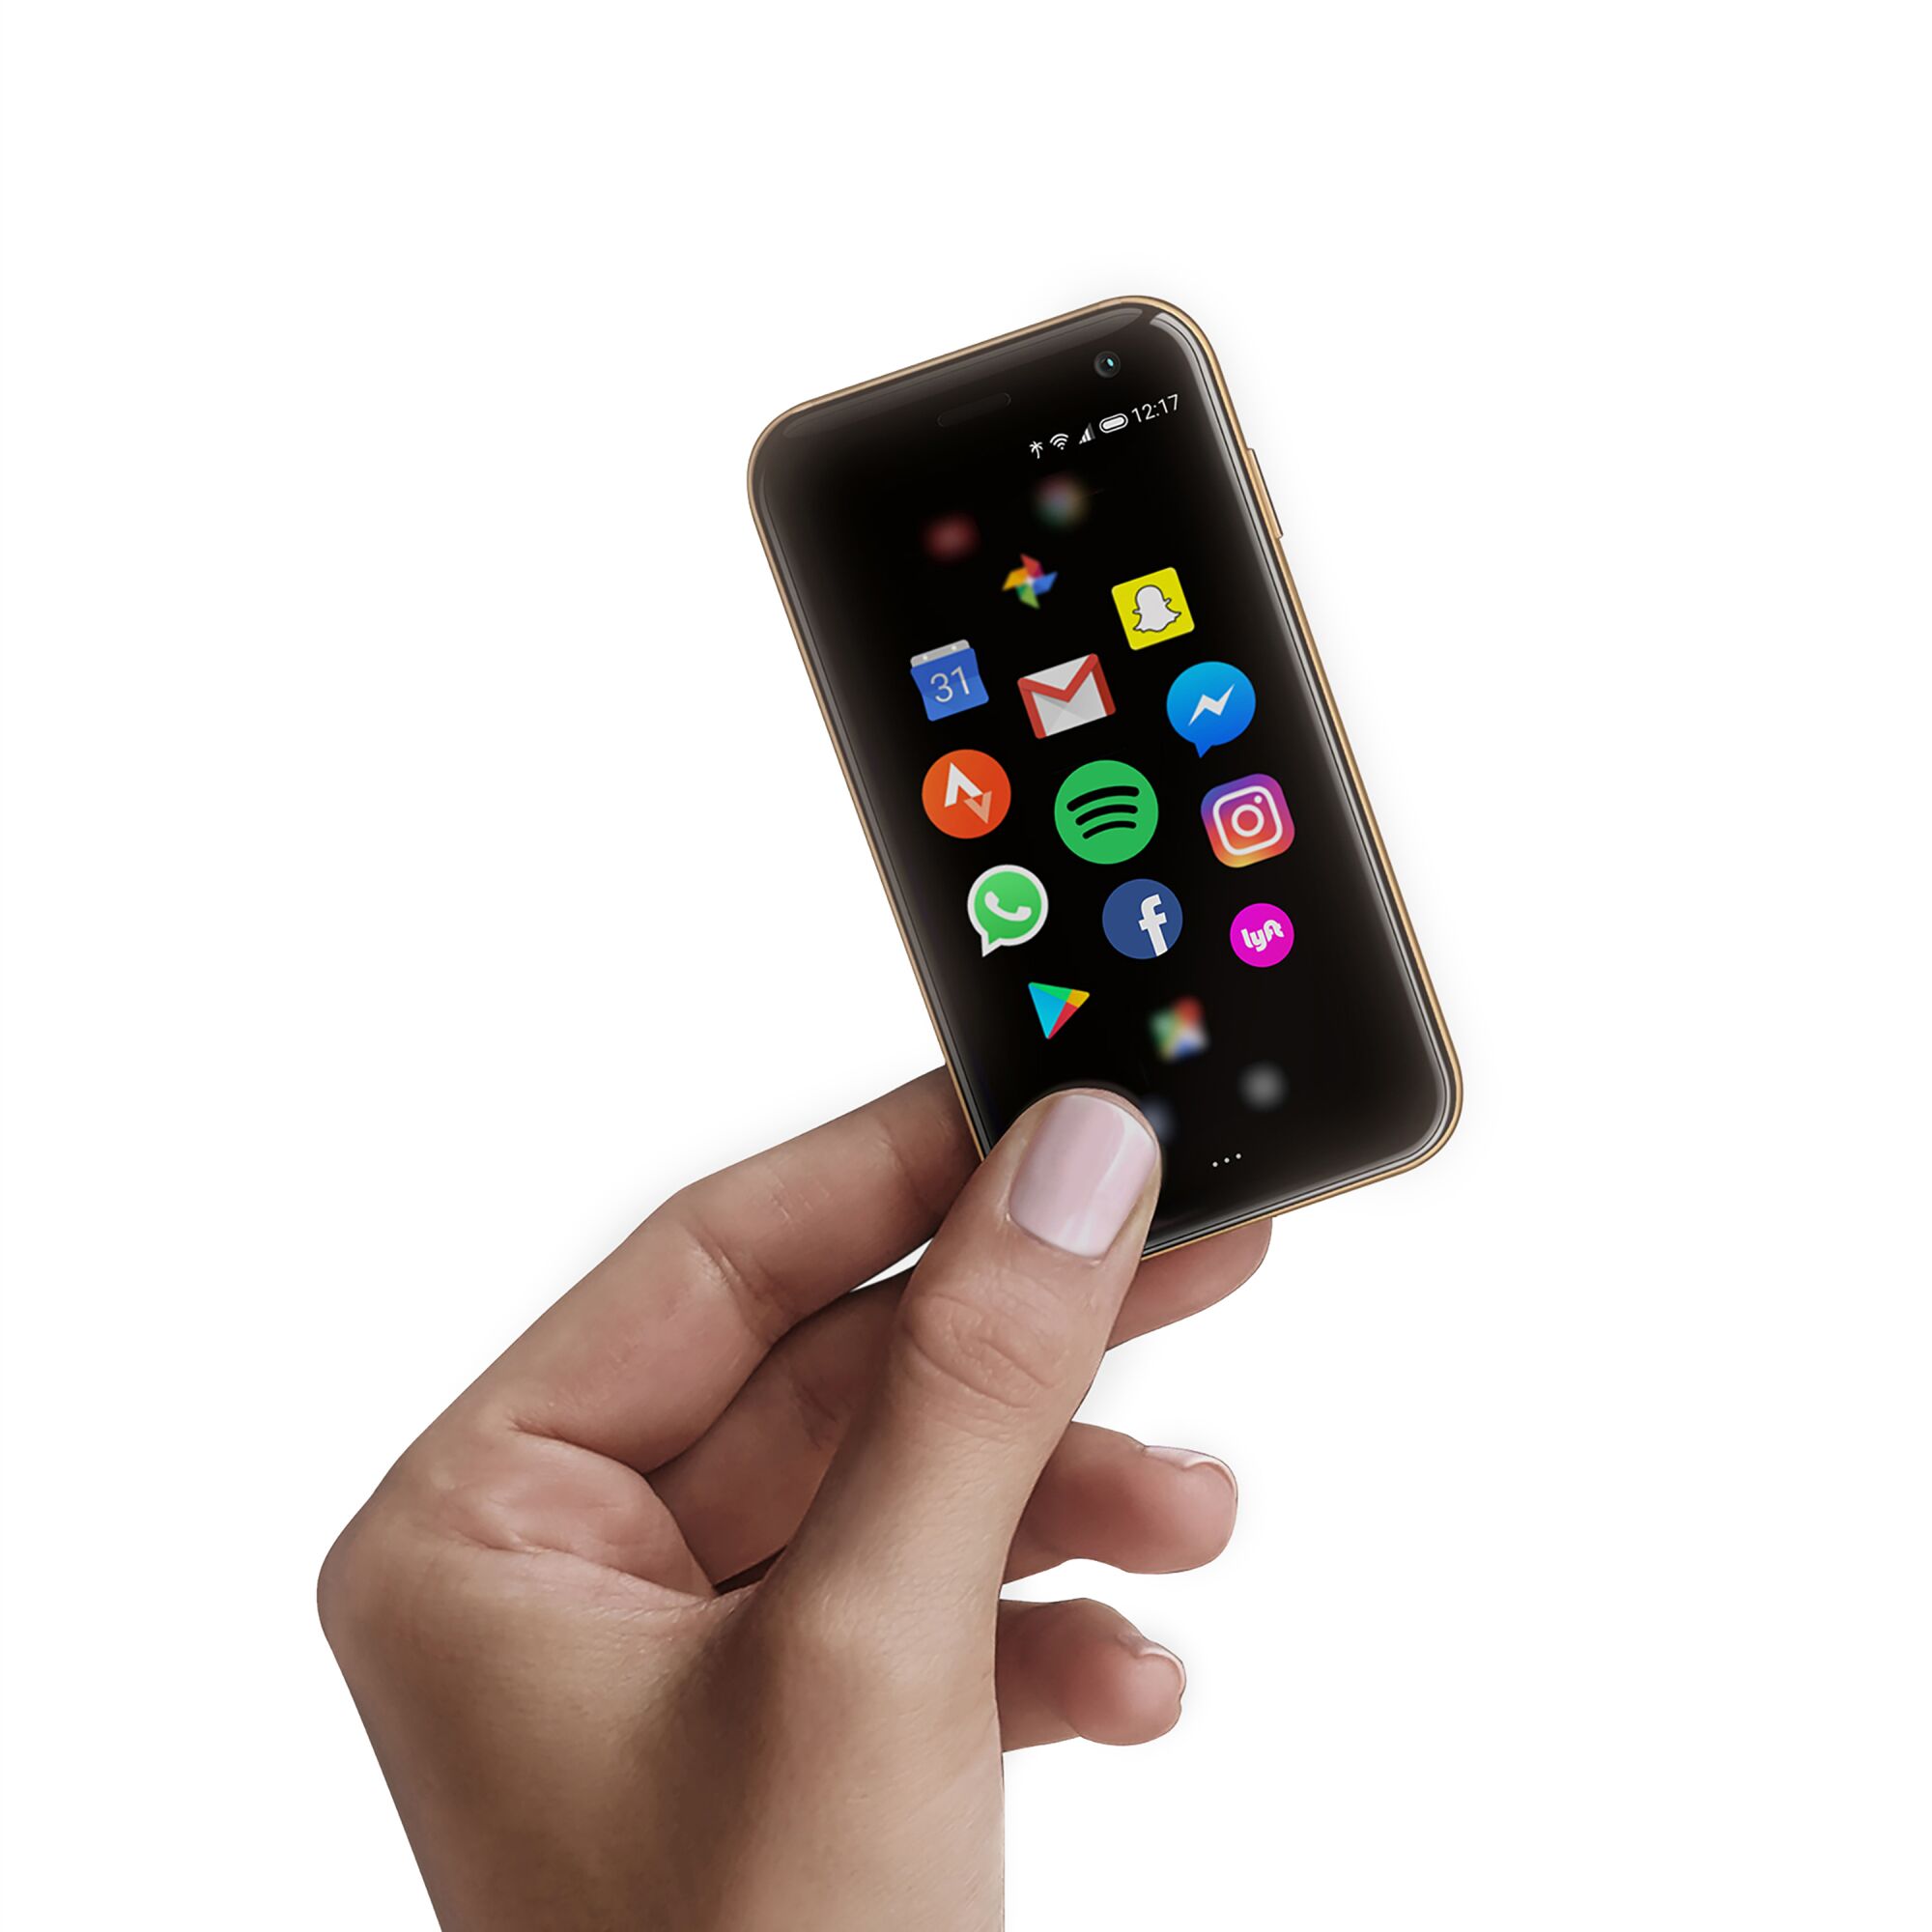 GIFT GUIDE - TECH: Palm phone